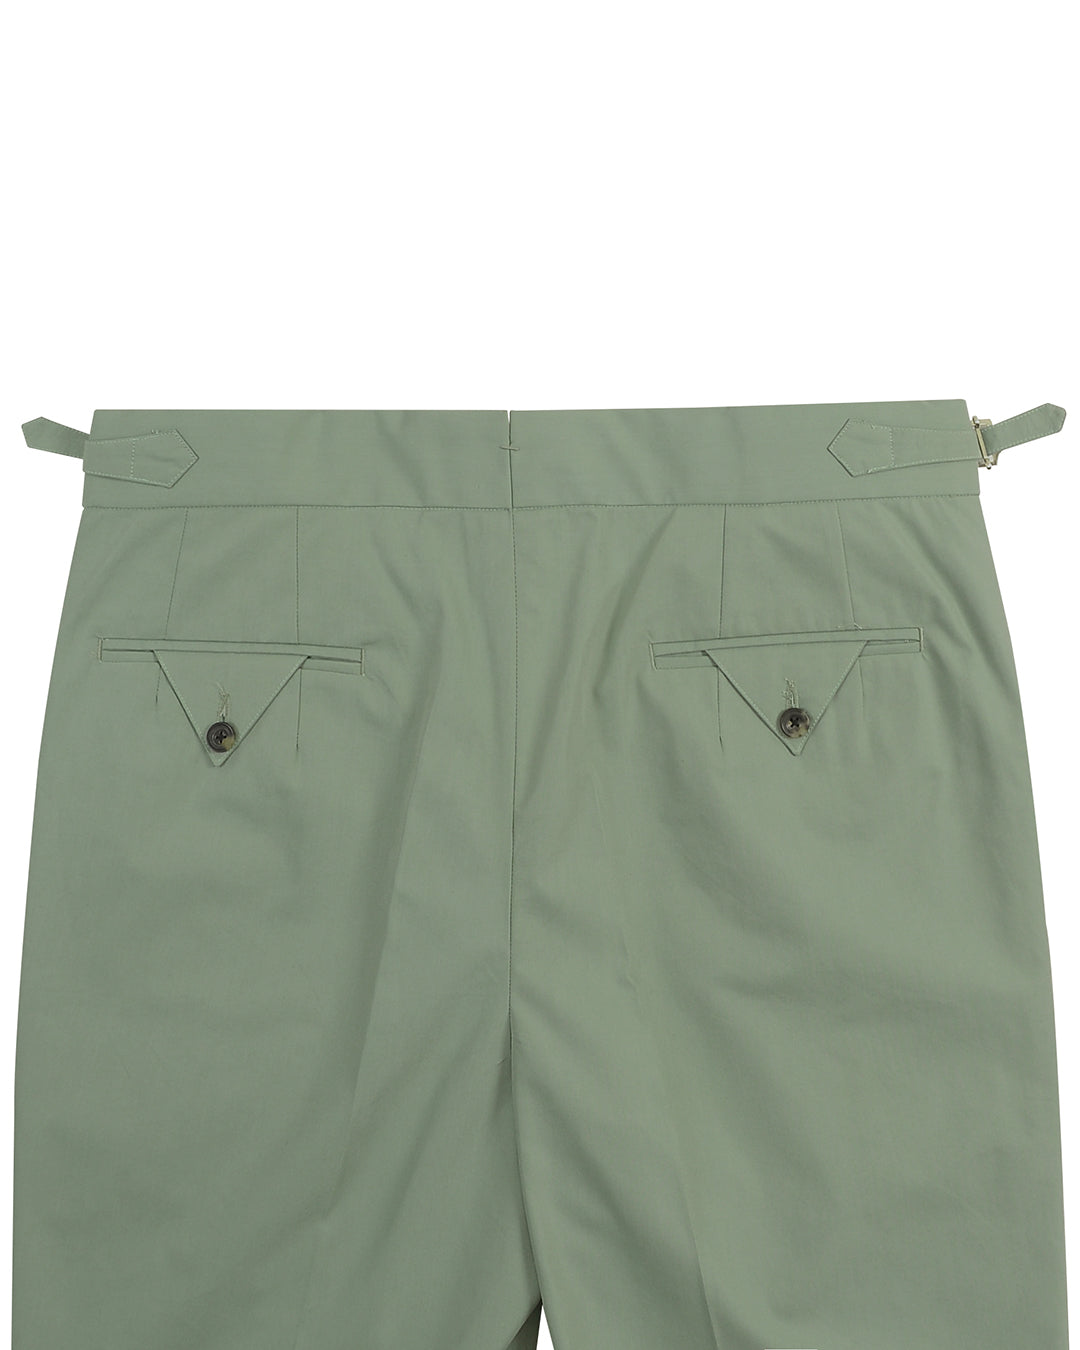 Travel Pants: Seaspray Green